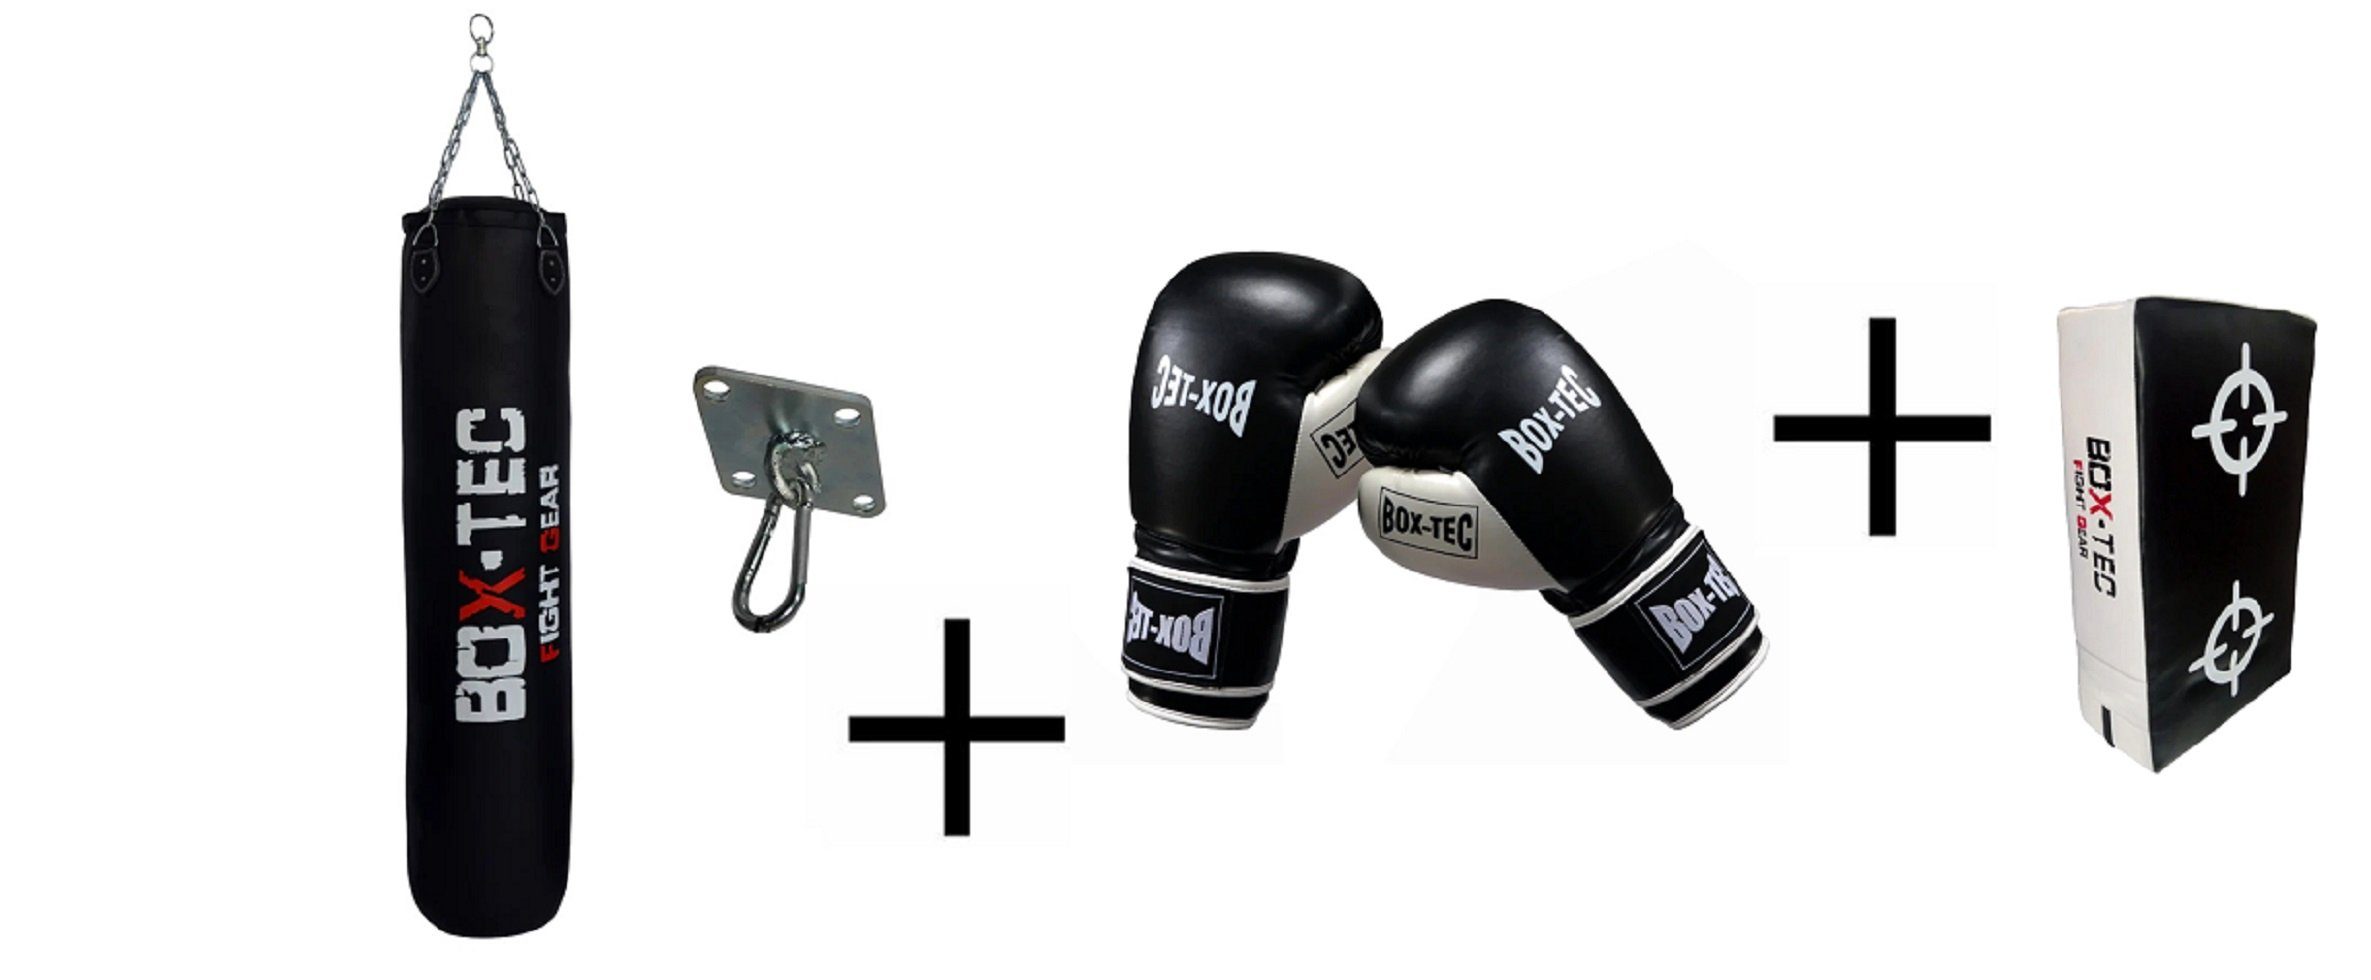 Trendy Sport Boxhandschuhe Boxausrüstung: Boxsack mit Deckenhalterung +  Boxhandschuhe + Kick-Pad